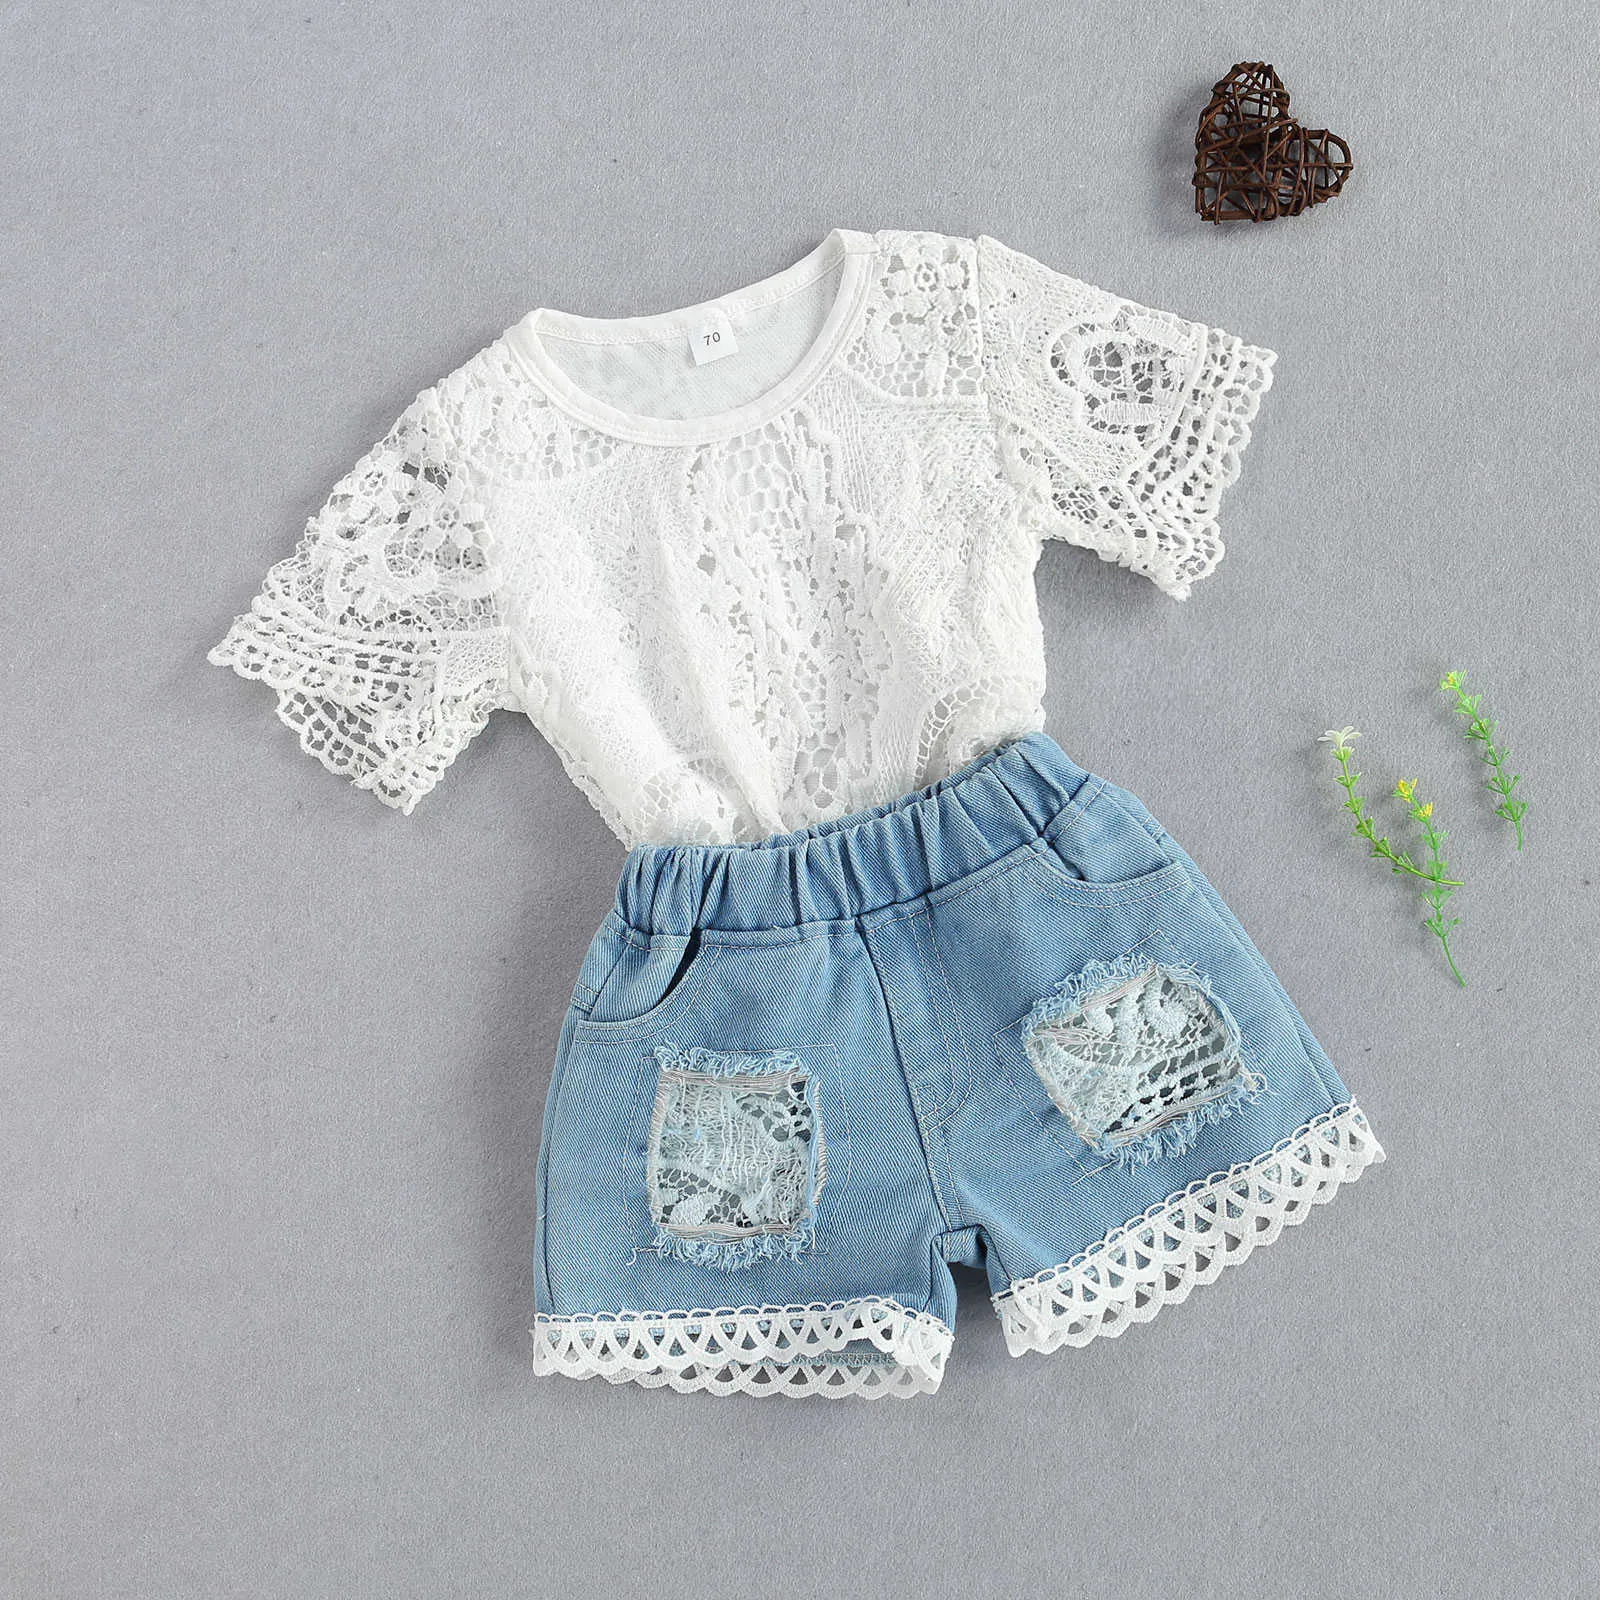 Clothing Sets Fashion Infant Newborn Baby Girls Summer Clothes Sets White Flowers Bodysuits Top Elastic Shorts 2PCs